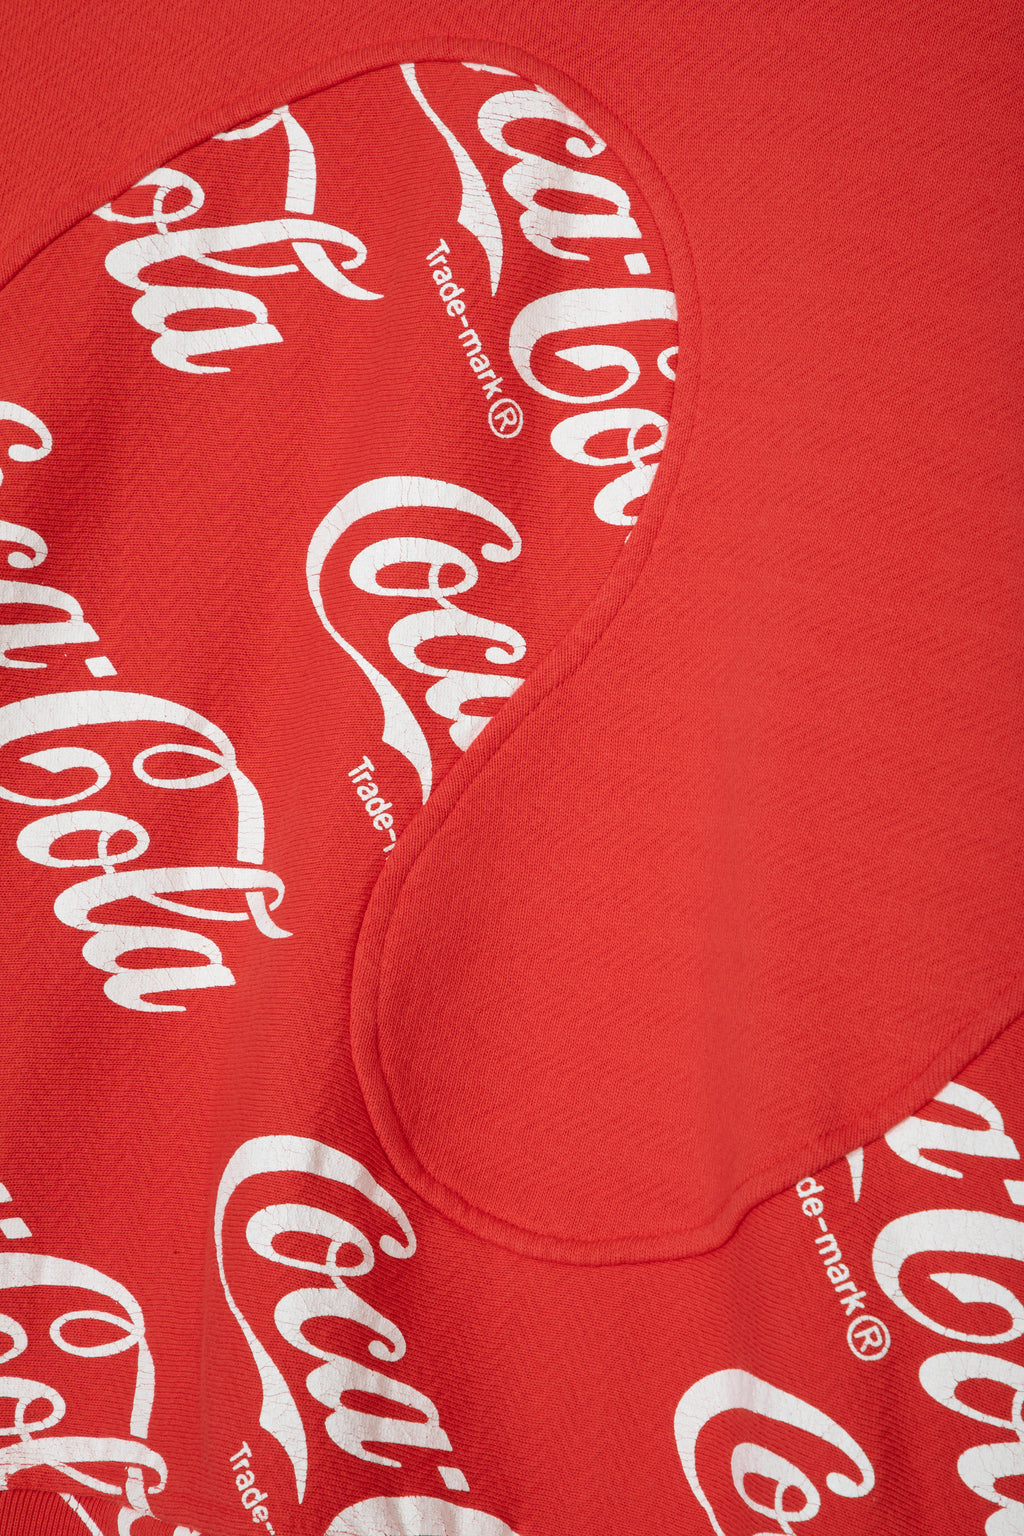 alt-image__Felpa-rossa-con-cappuccio-Coca-Cola---Men-Coca-Cola-Swirl-Hoodie-Knit